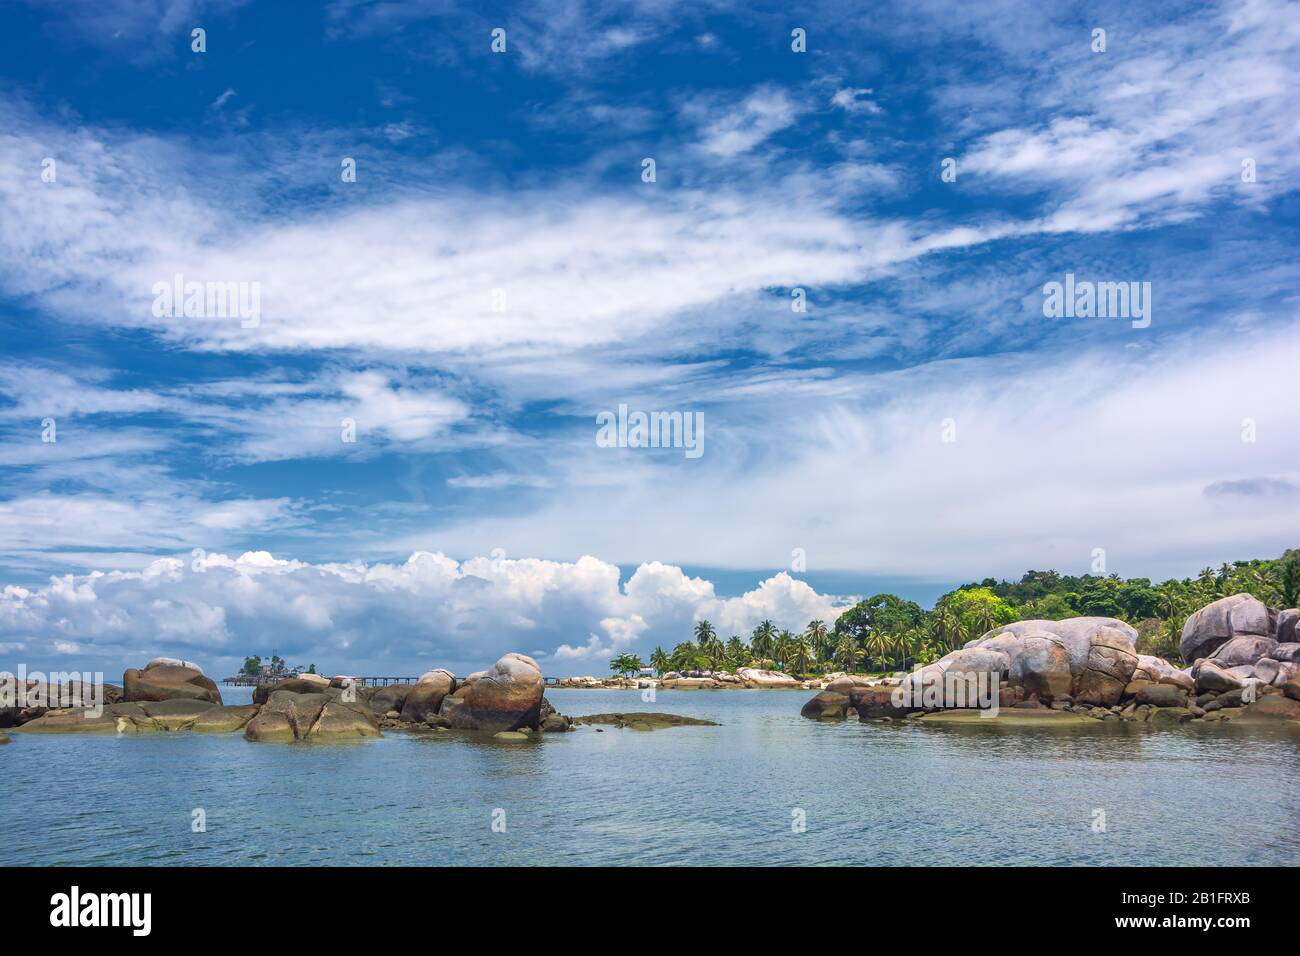 Wonderful Landscape Photos at Batam Bintan Island Indonesia Stock Photo